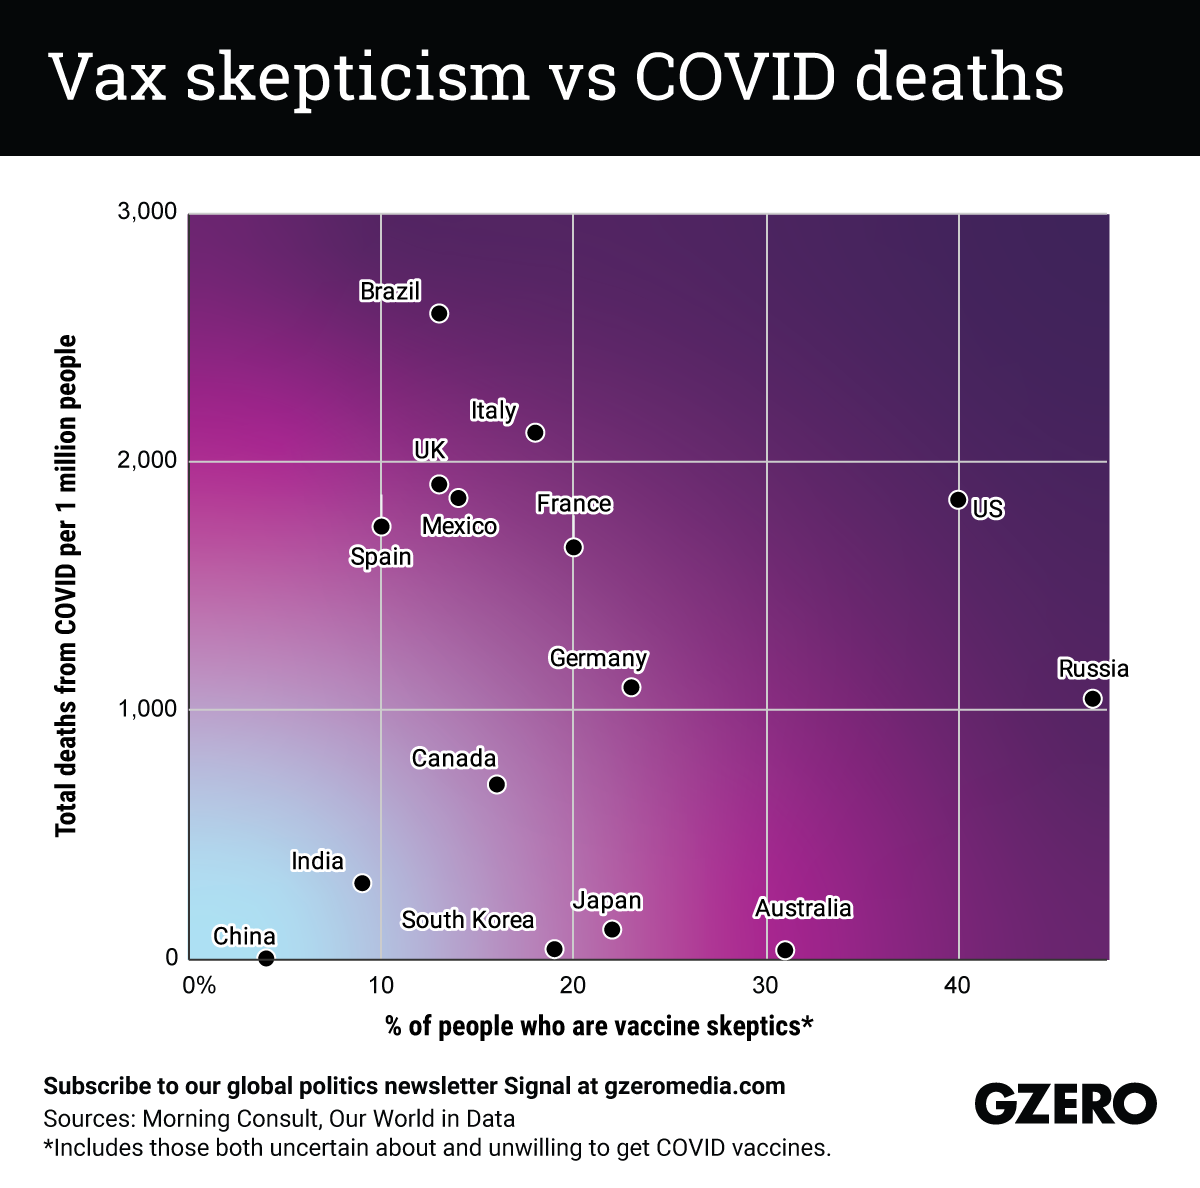 Vax skepticism vs COVID deaths